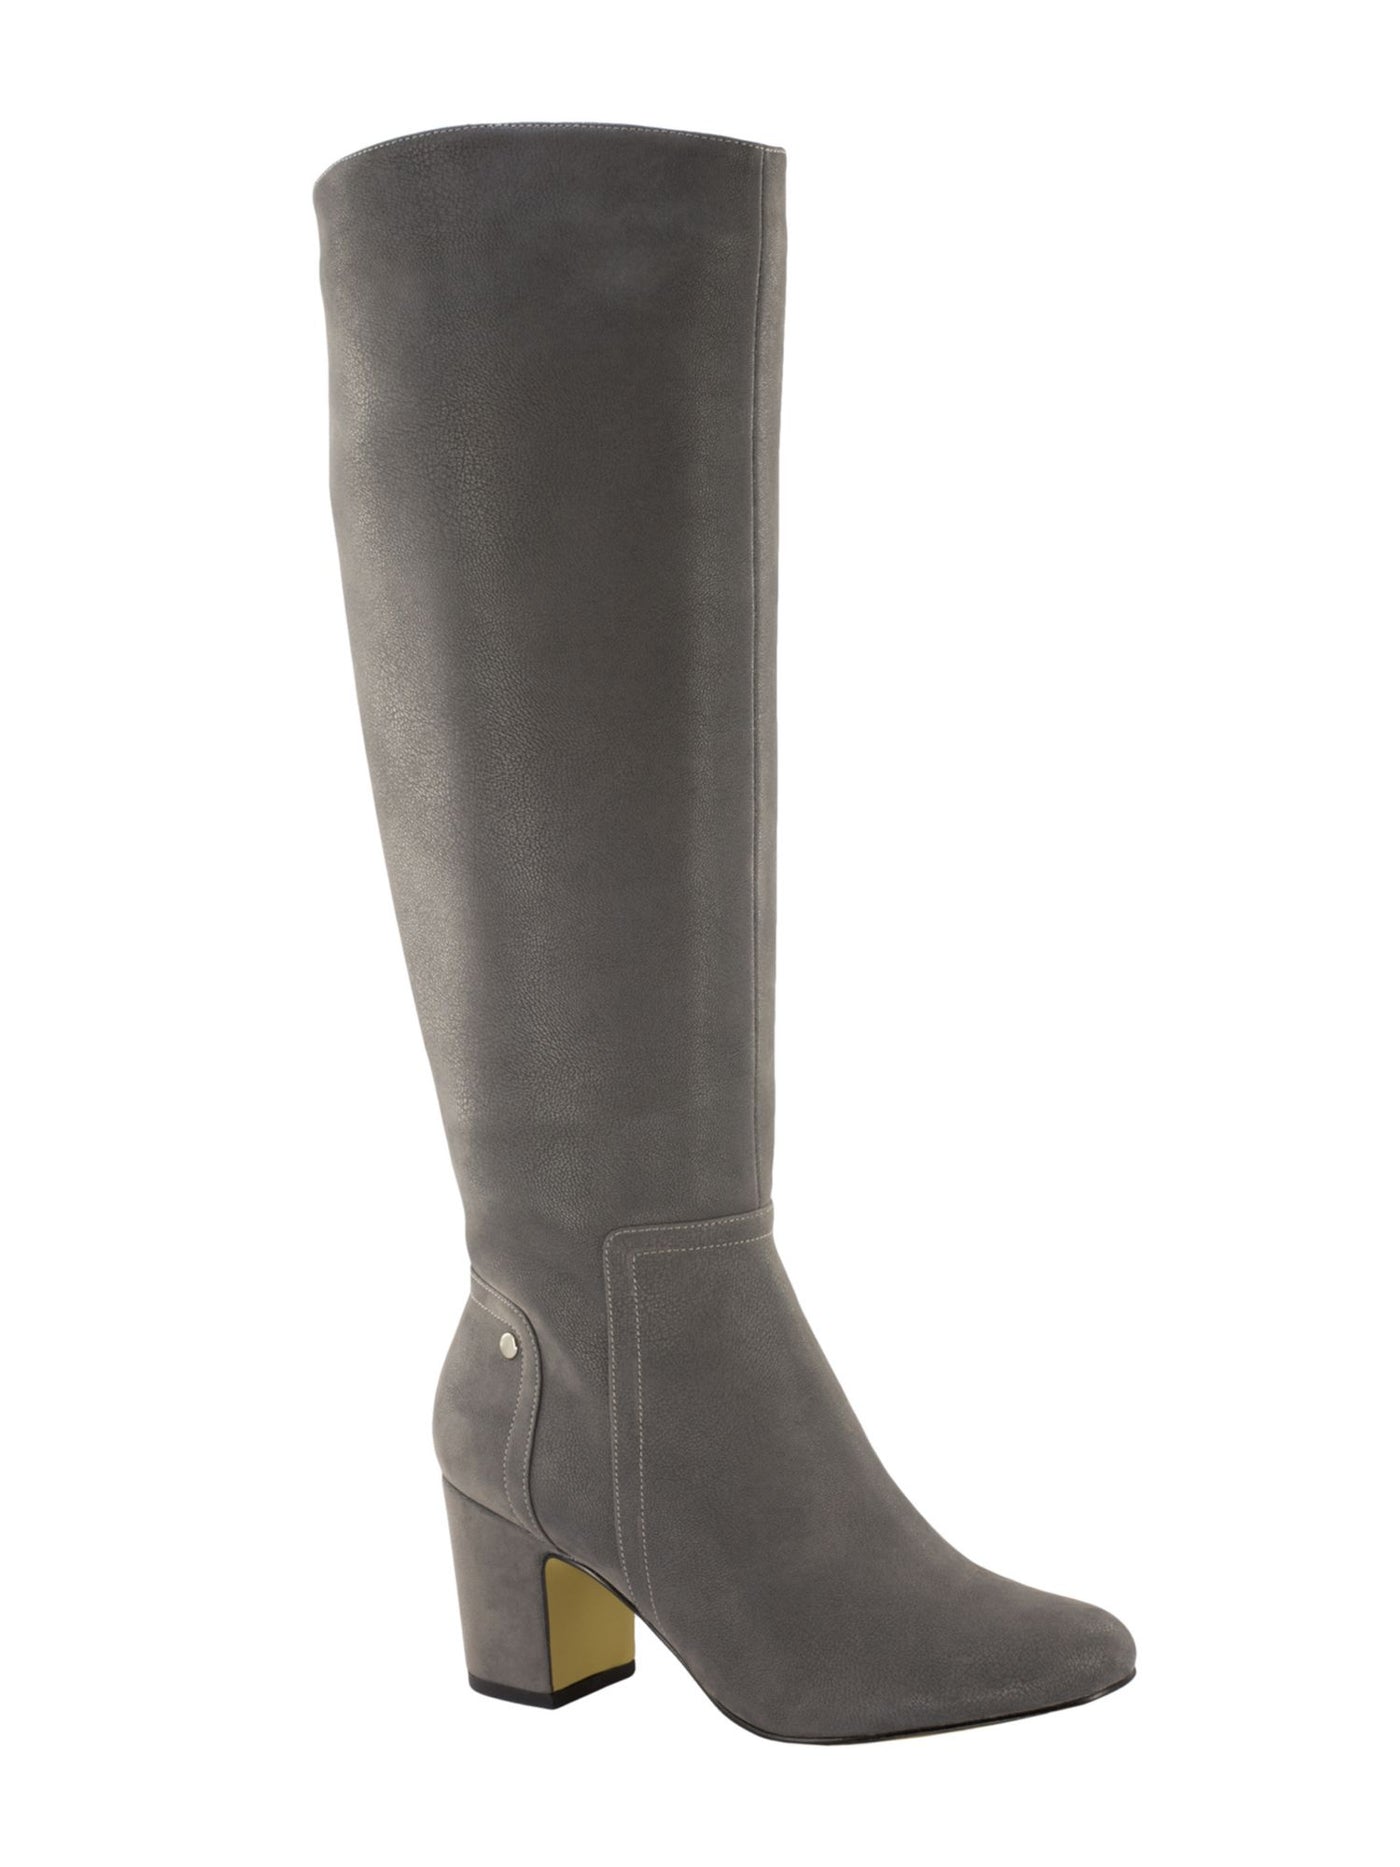 BELLA VITA Womens Gray Metal Stud Accents Flex Gore Padded Kassidy Ii Almond Toe Block Heel Zip-Up Boots Shoes 6 M